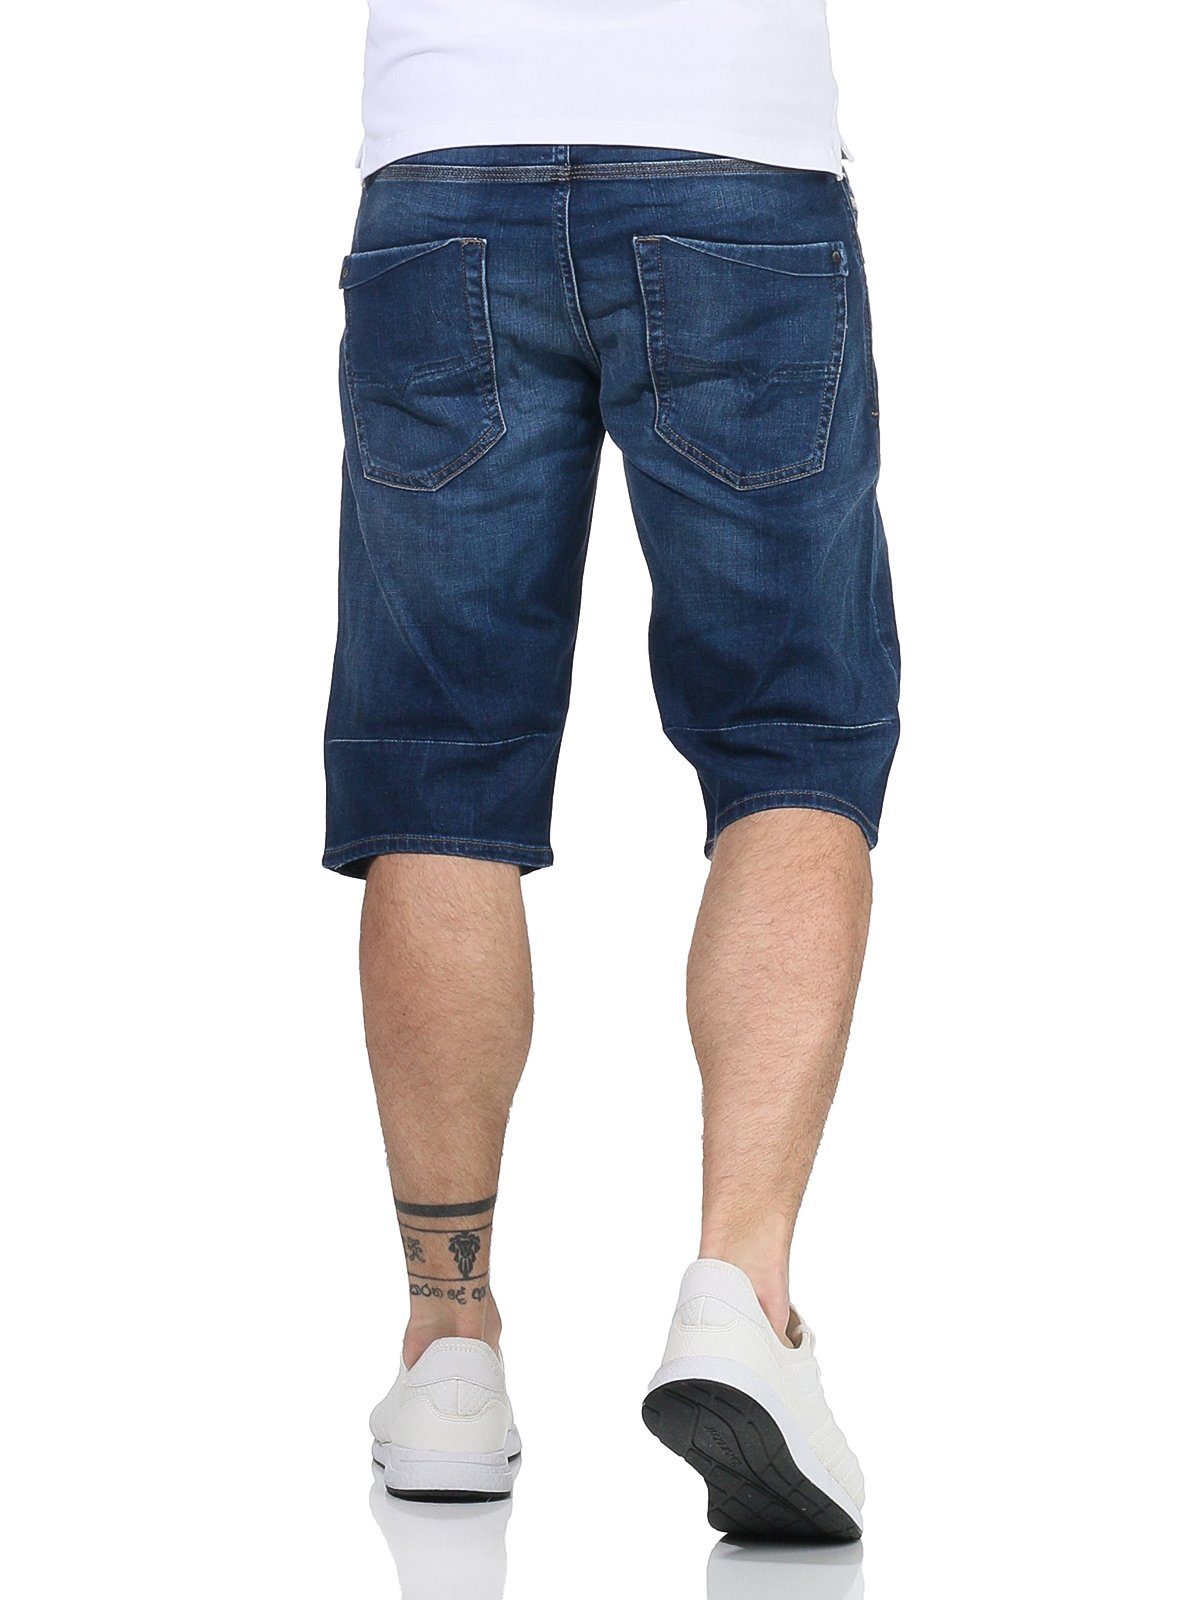 Herren kurze Shorts RG48R Kroshort RG48R Blau Jeansshorts Shorts, Diesel Used-Look dezenter Jeans Hose